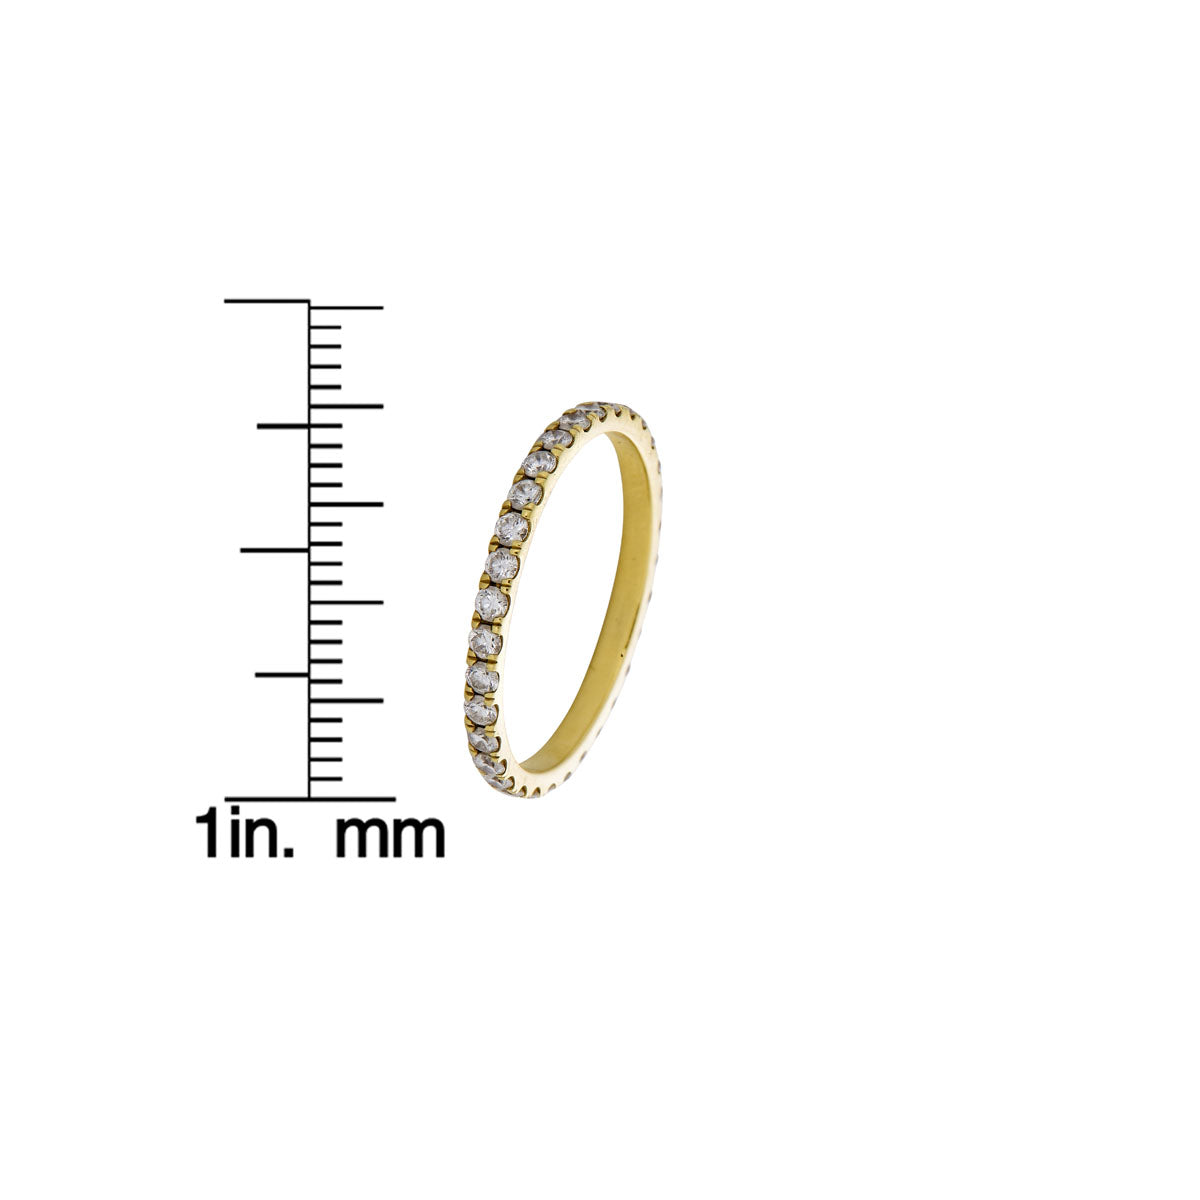 2pt diamond gold eternity band side view measurement